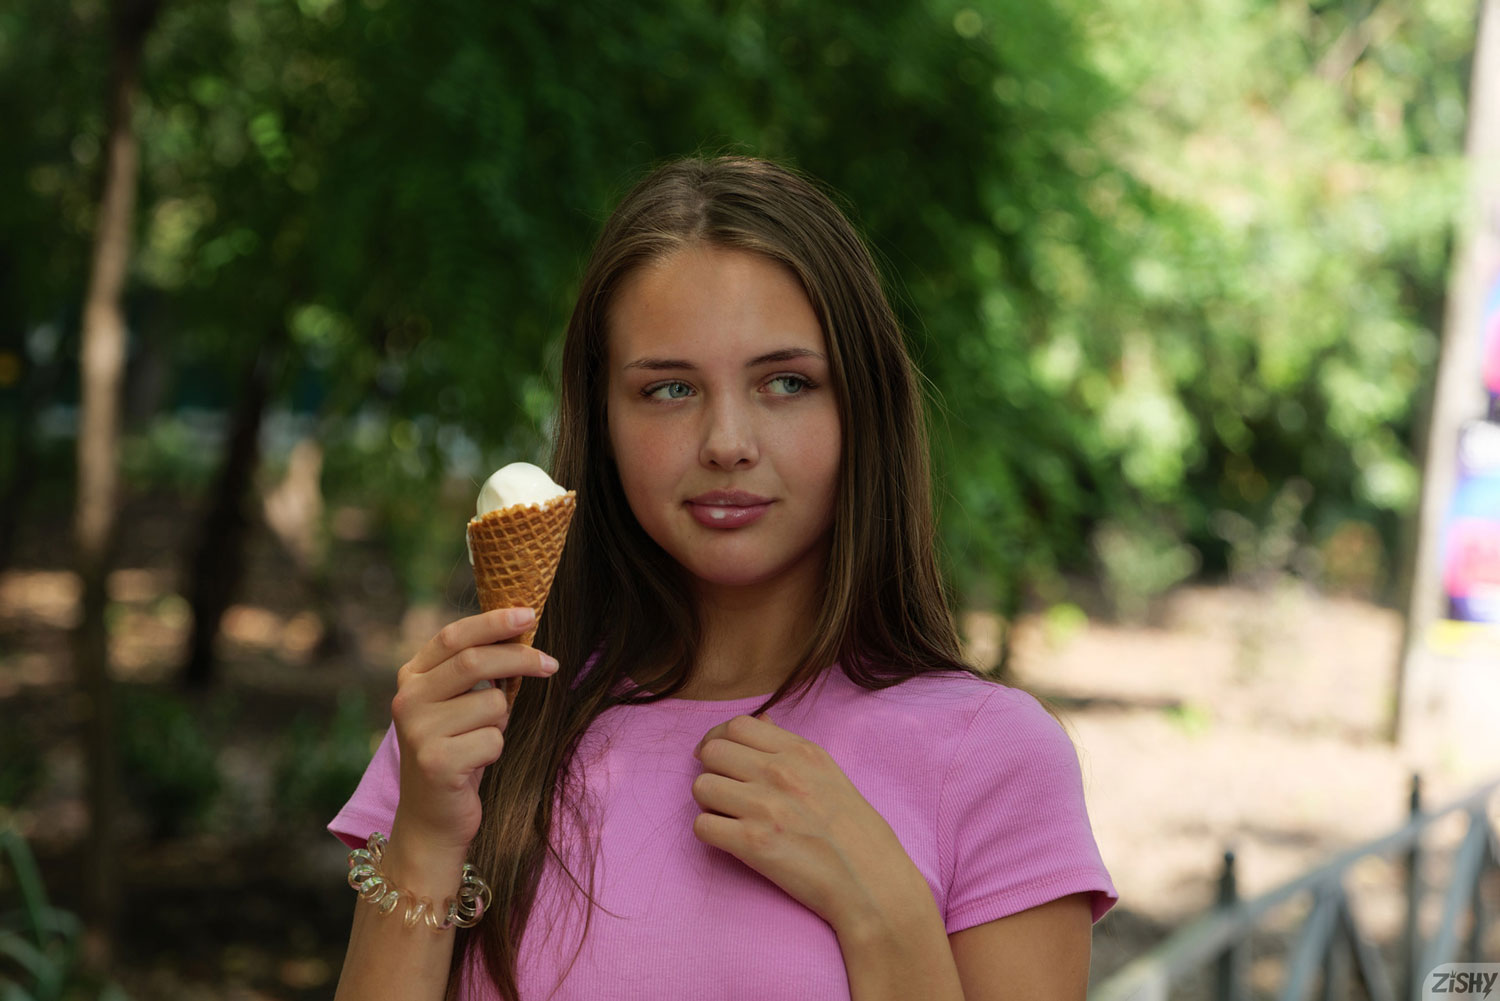 olya derkach loves ice cream 10